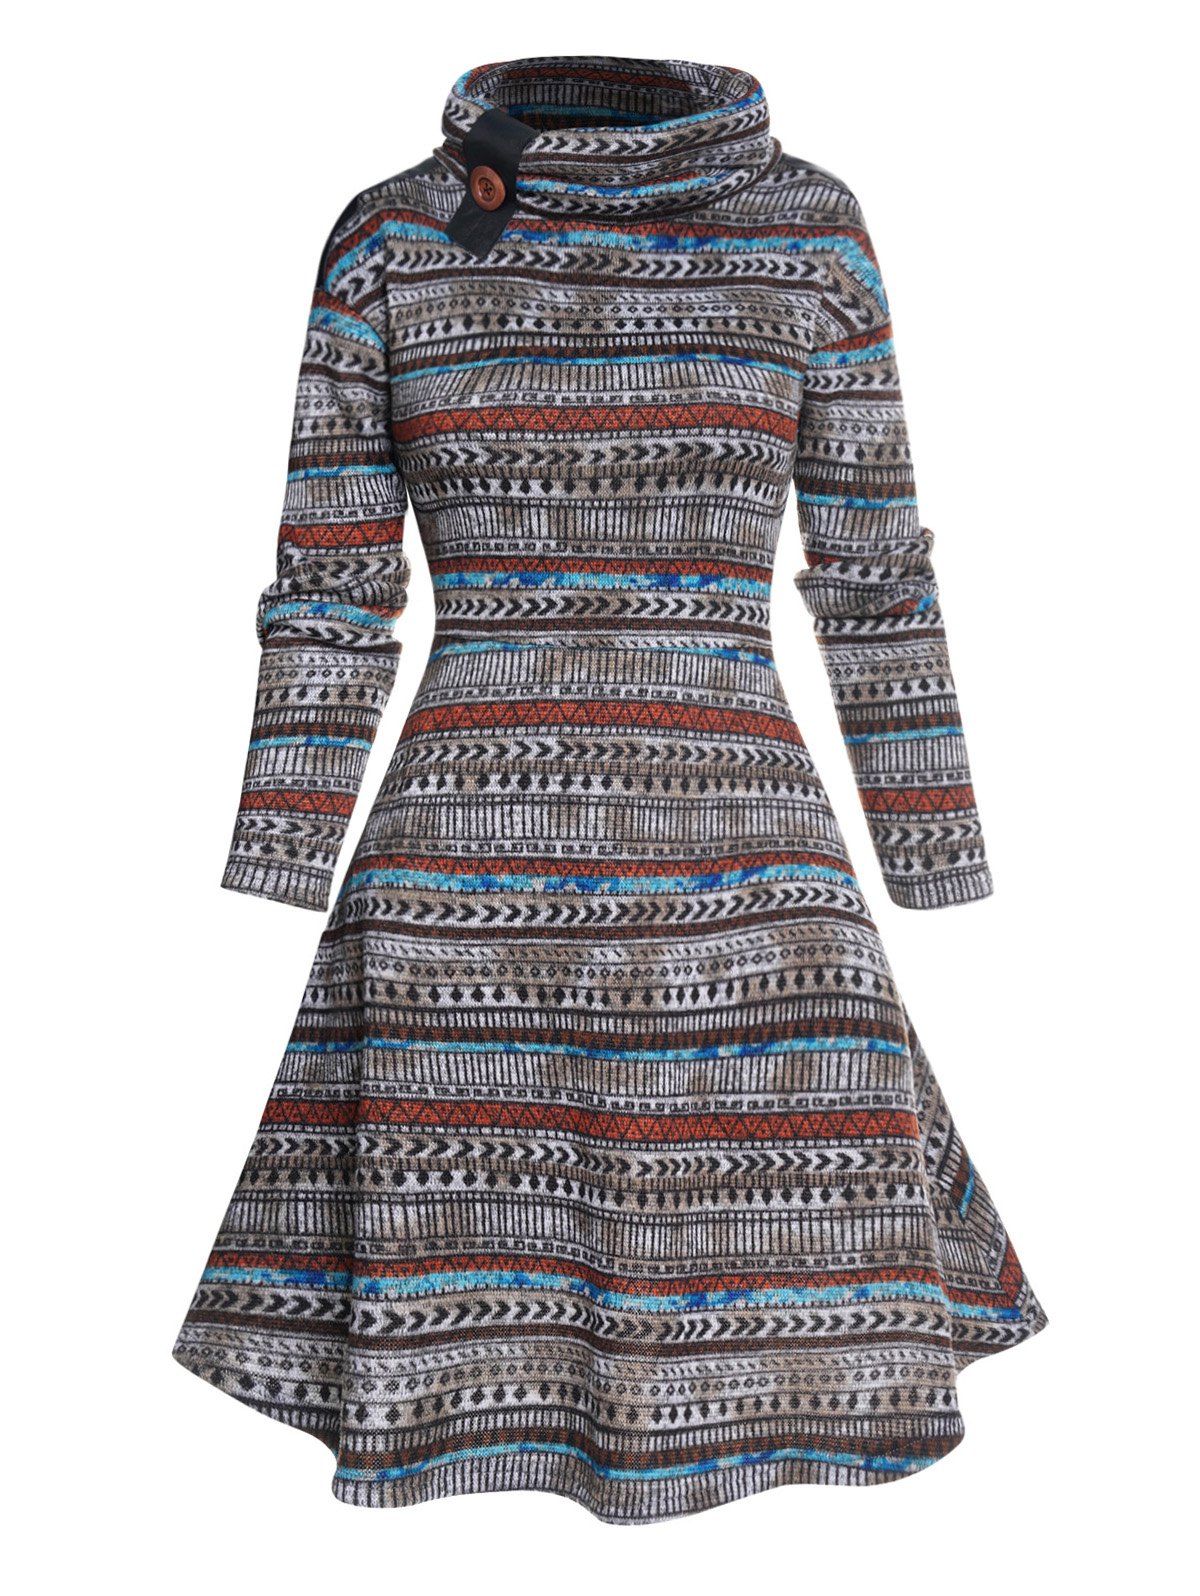 Ethnic Style Dress Striped Printed Dress Long Sleeve High Waisted A Line Mini Dress - COFFEE M